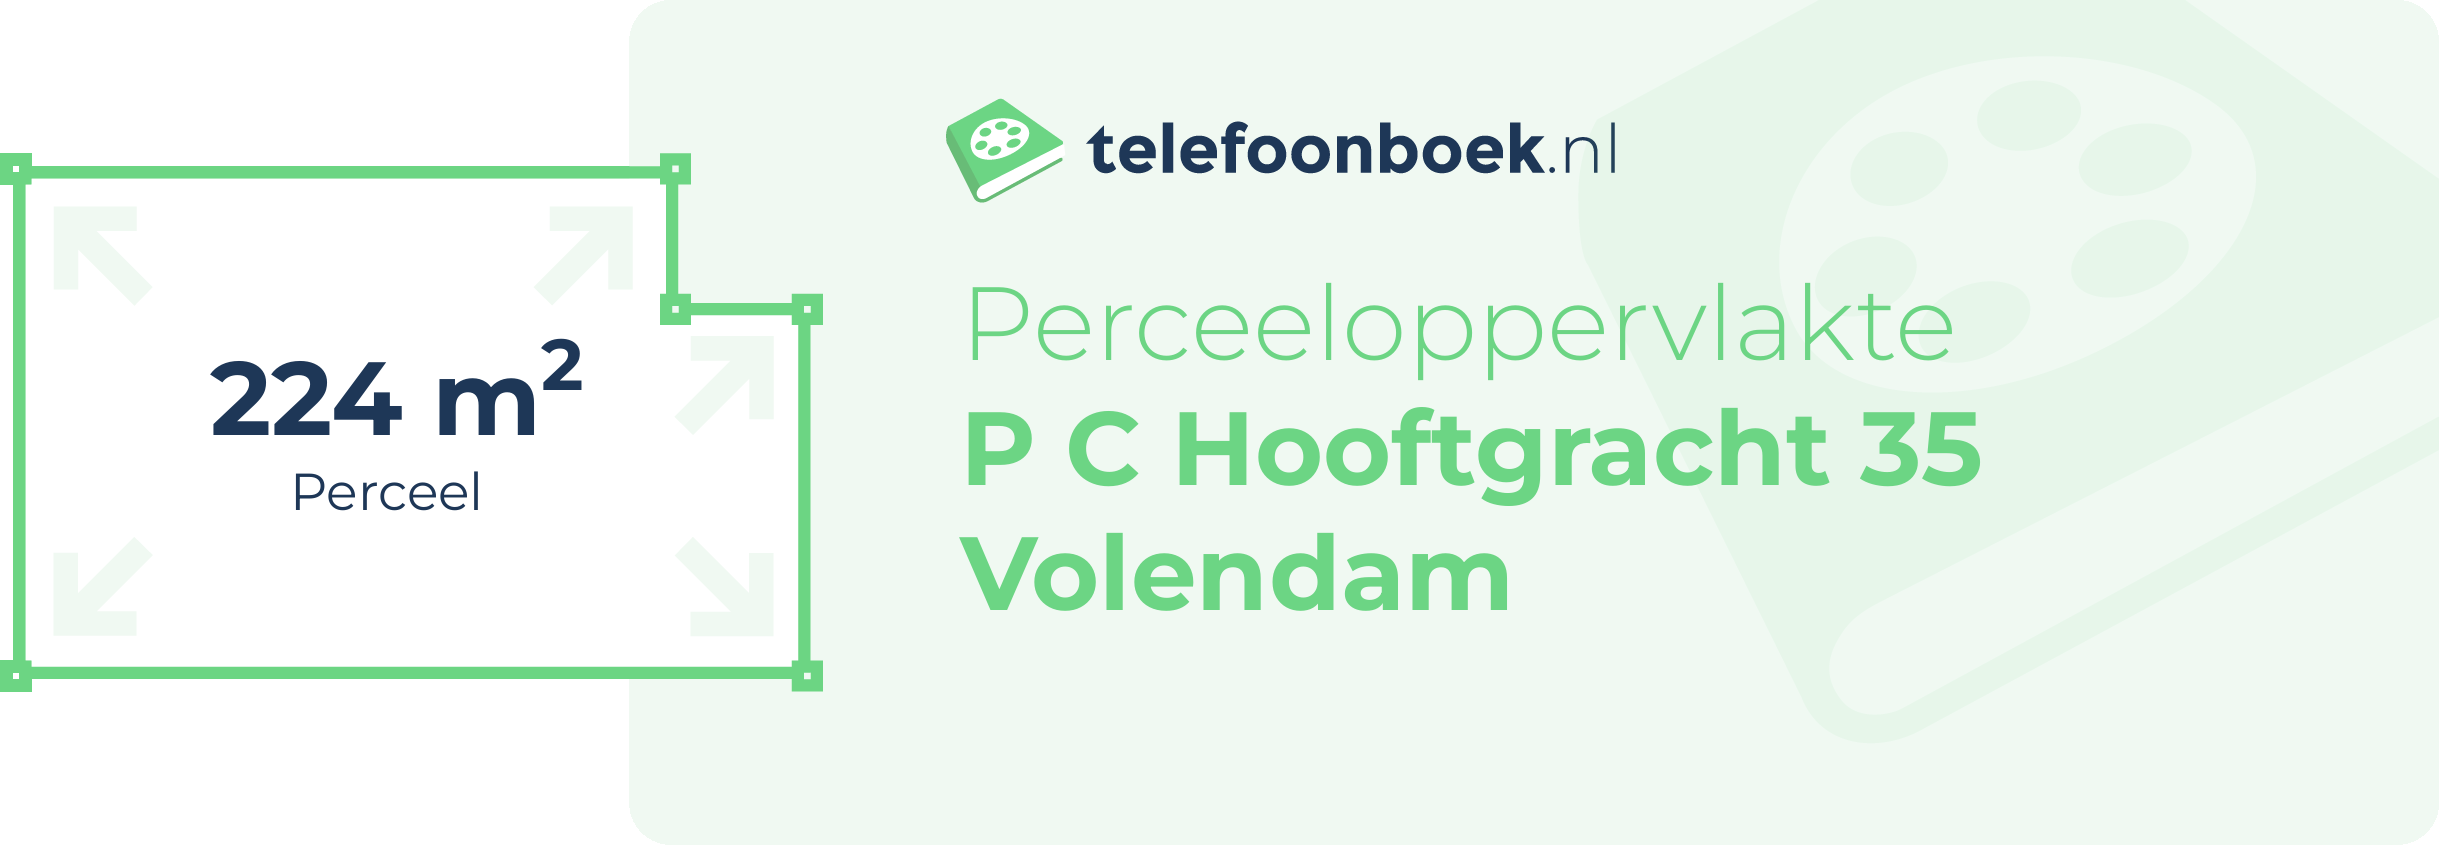 Perceeloppervlakte P C Hooftgracht 35 Volendam